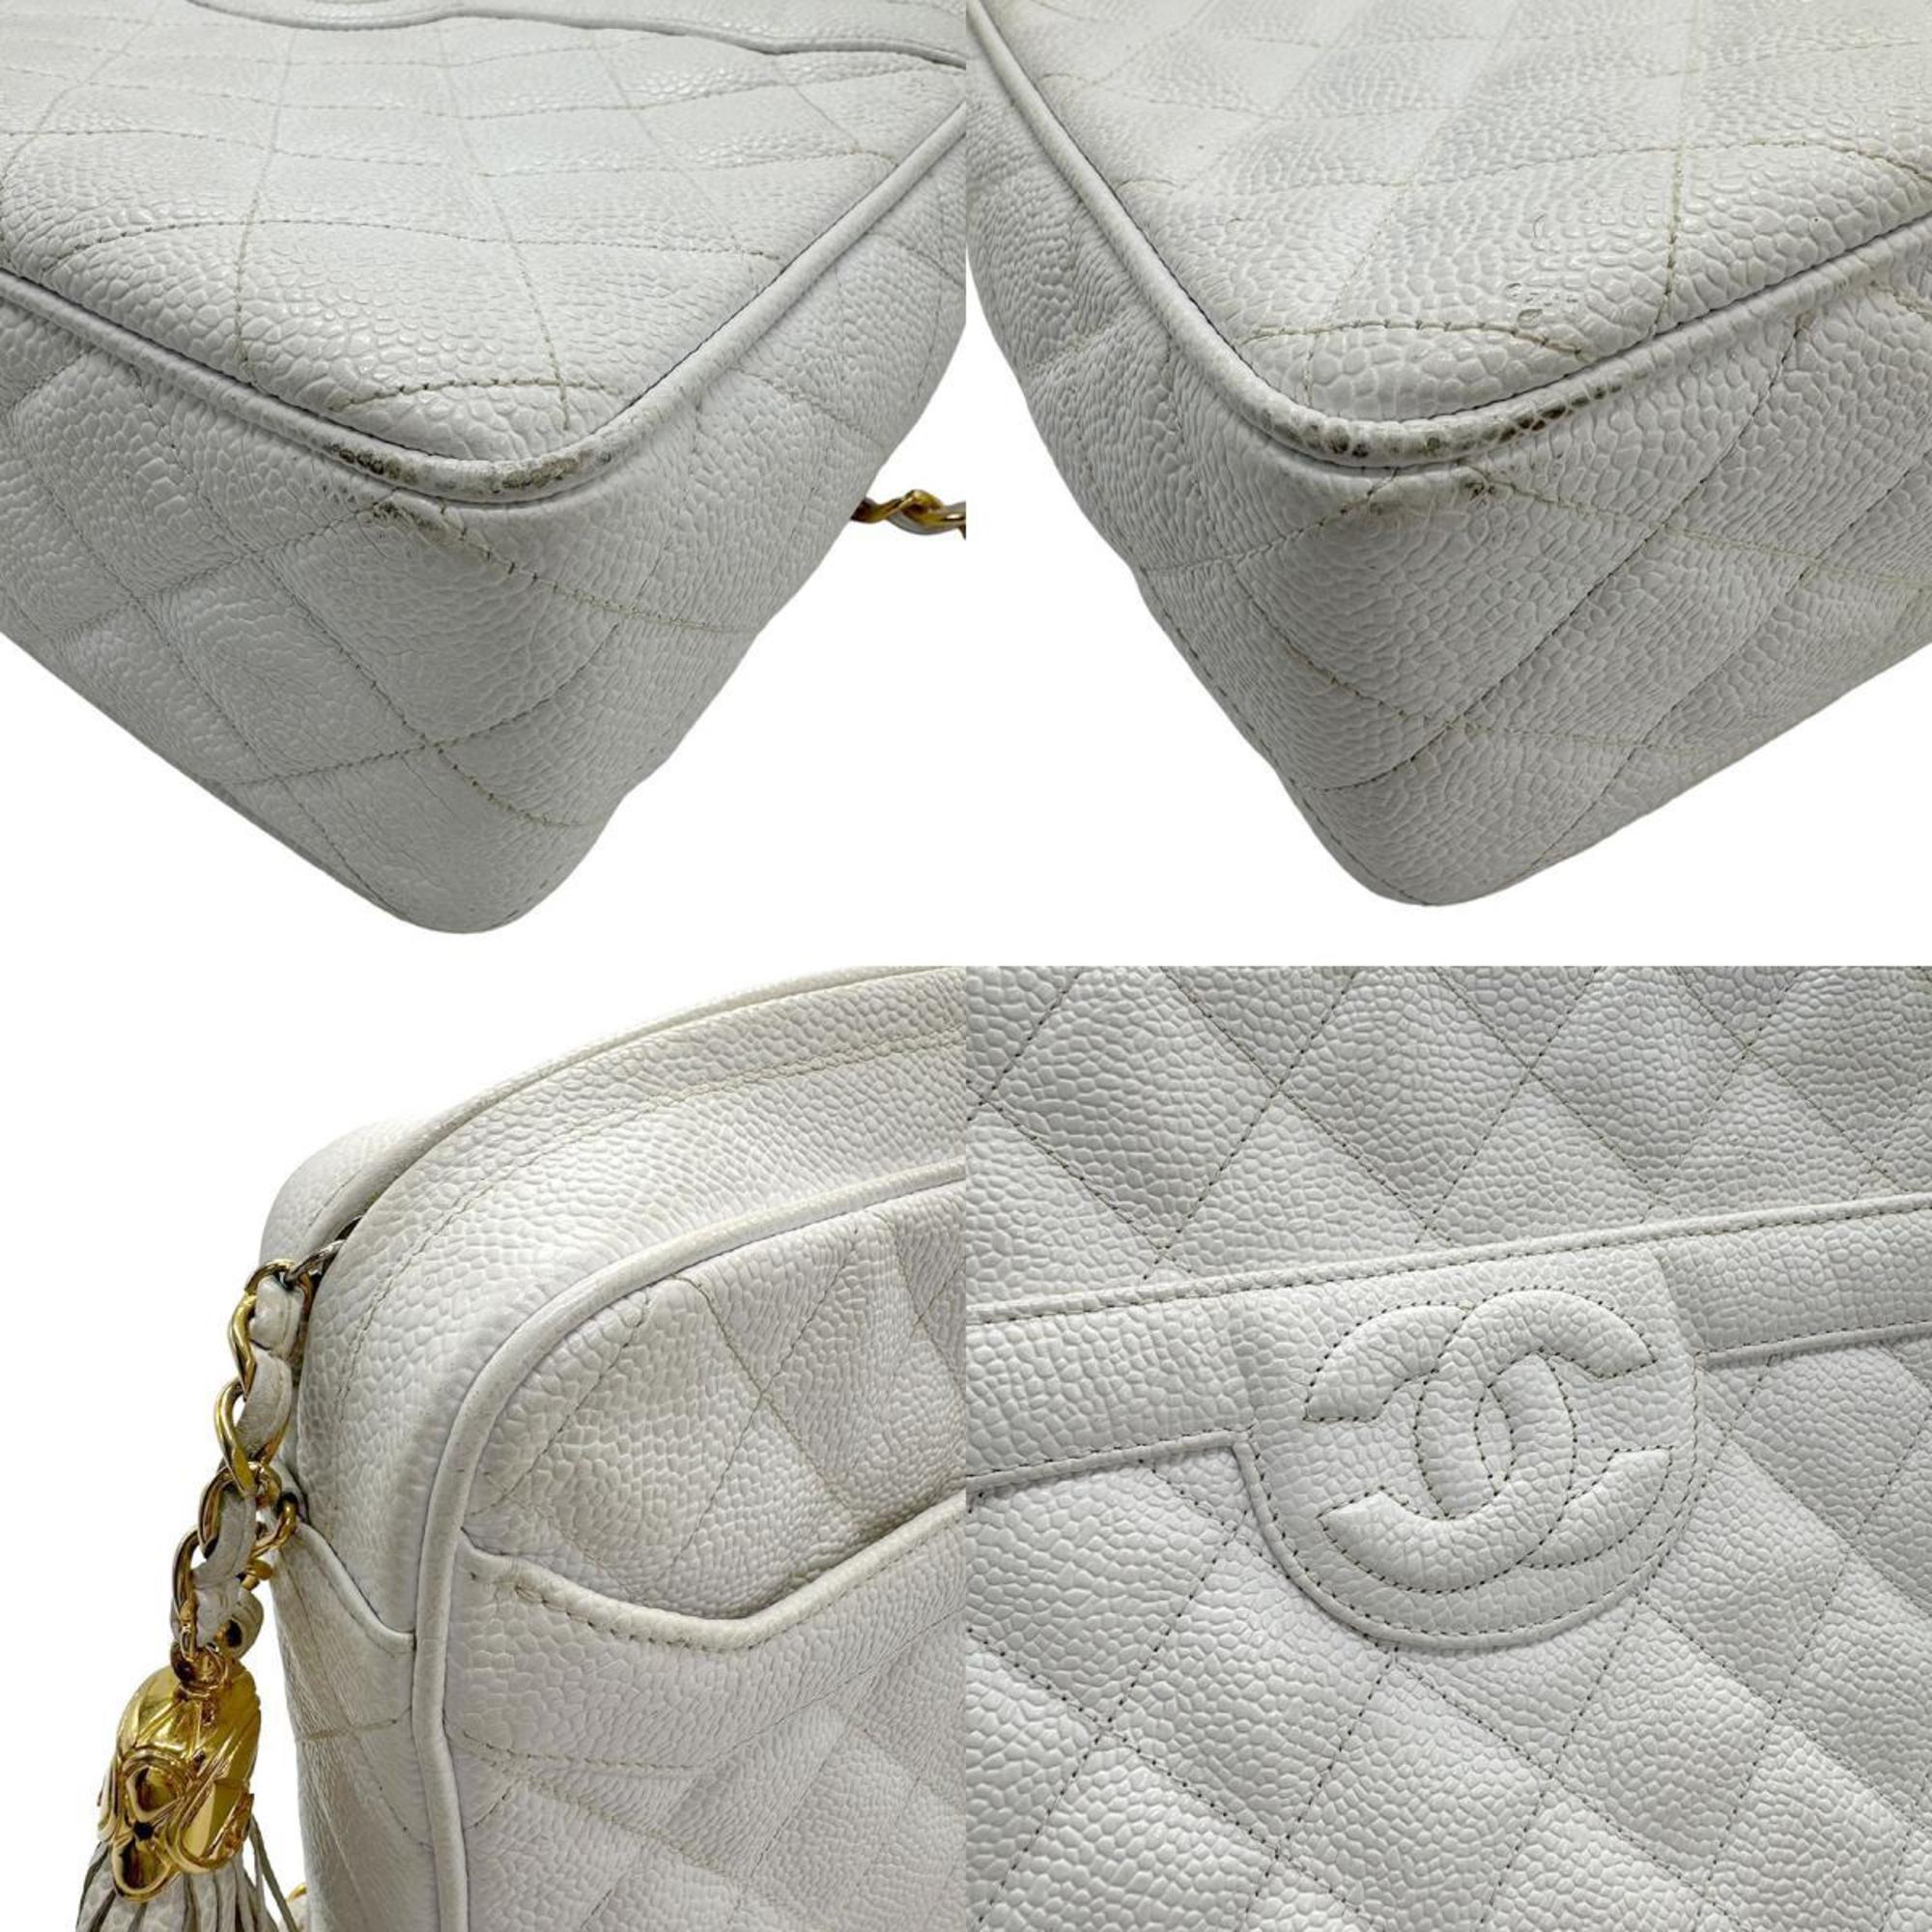 CHANEL Shoulder Bag Matelasse Coco Mark Caviar Leather Metal Off-White Gold Women's z1096